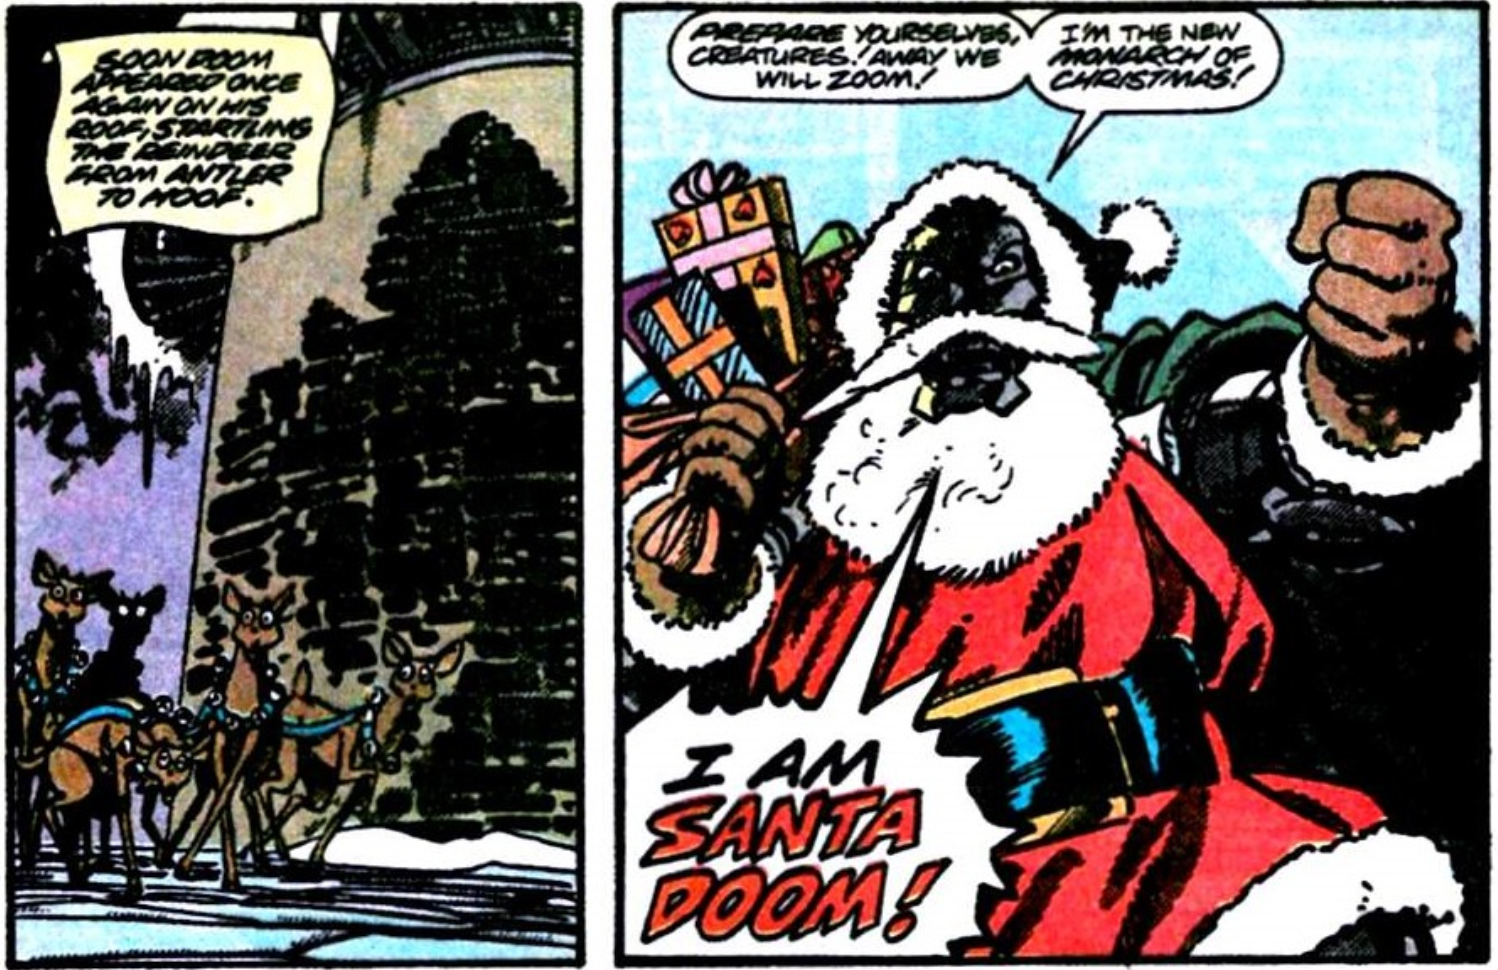 Doctor Doom dressed as Santa Claus exclaiming, "I AM SANTA DOOM!"